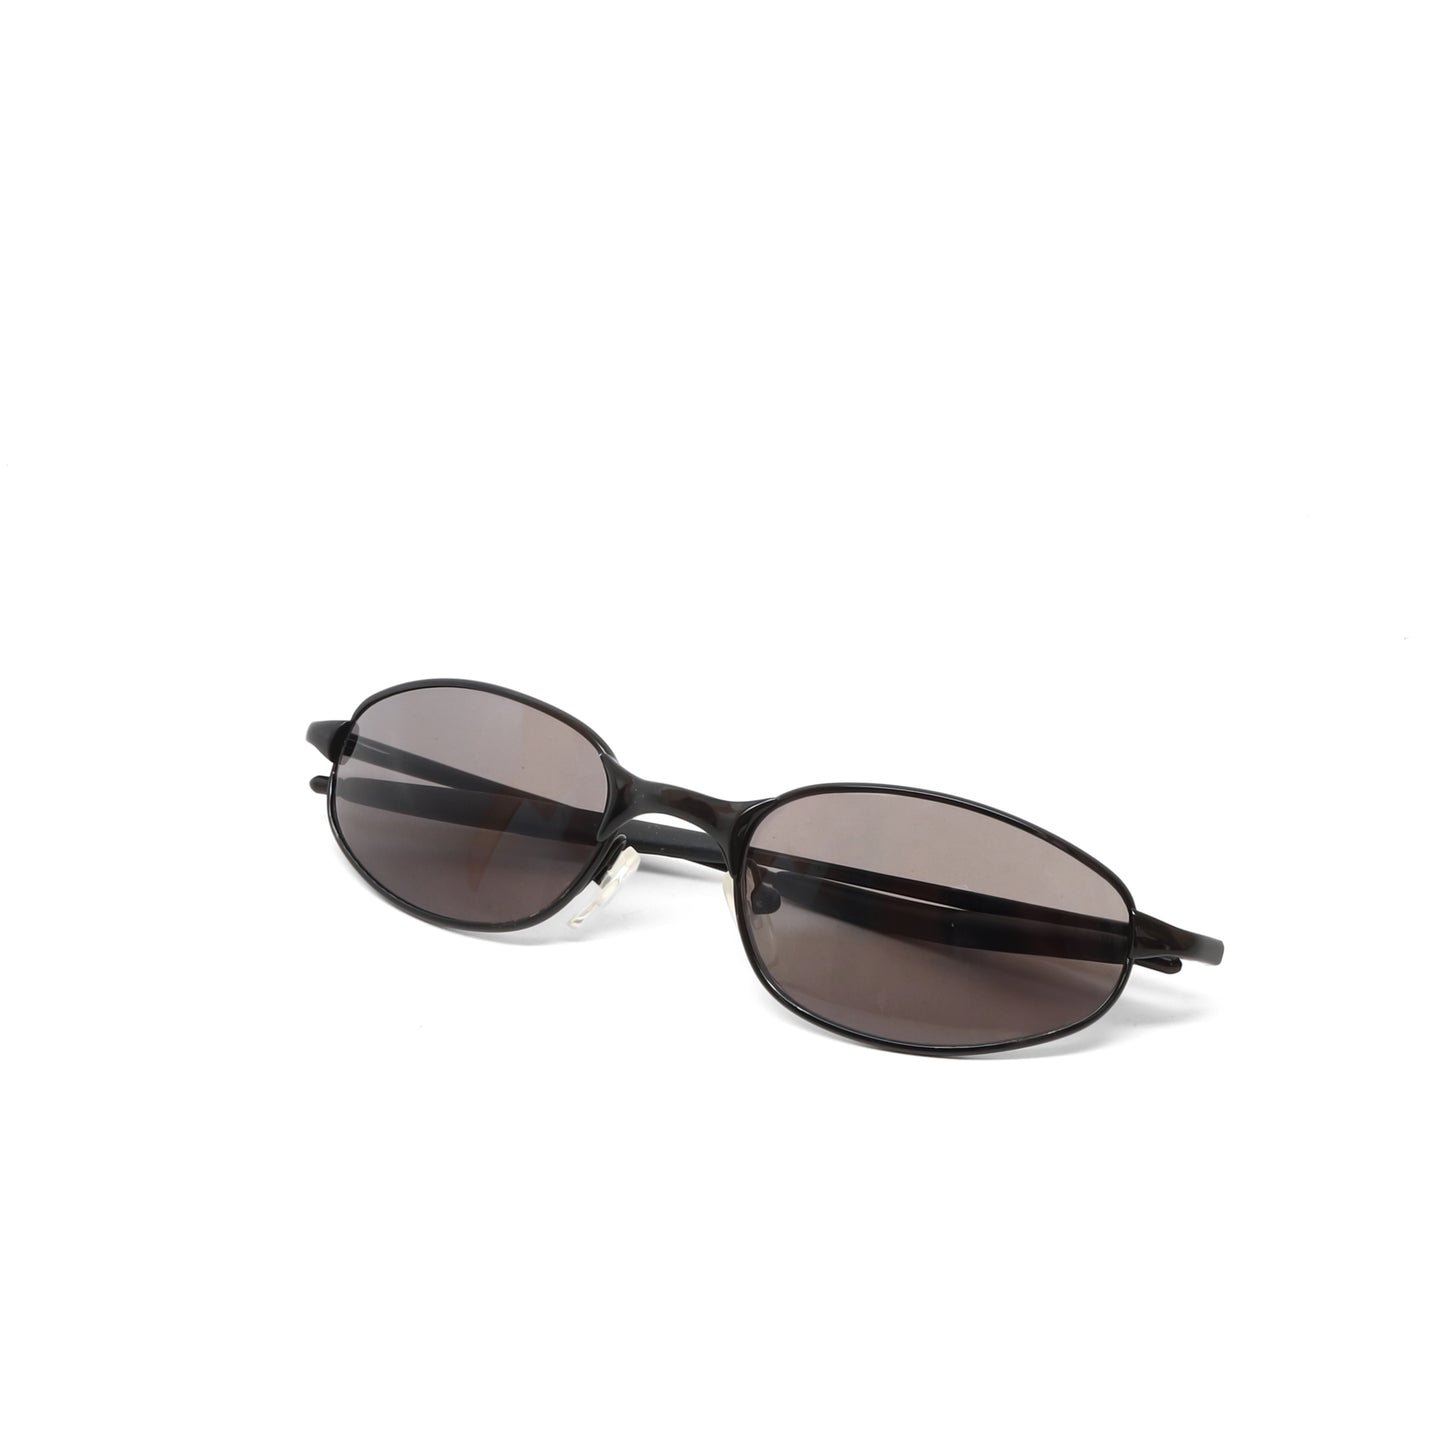 Vintage Small Size 90s Matrix Style Sunglasses - Black